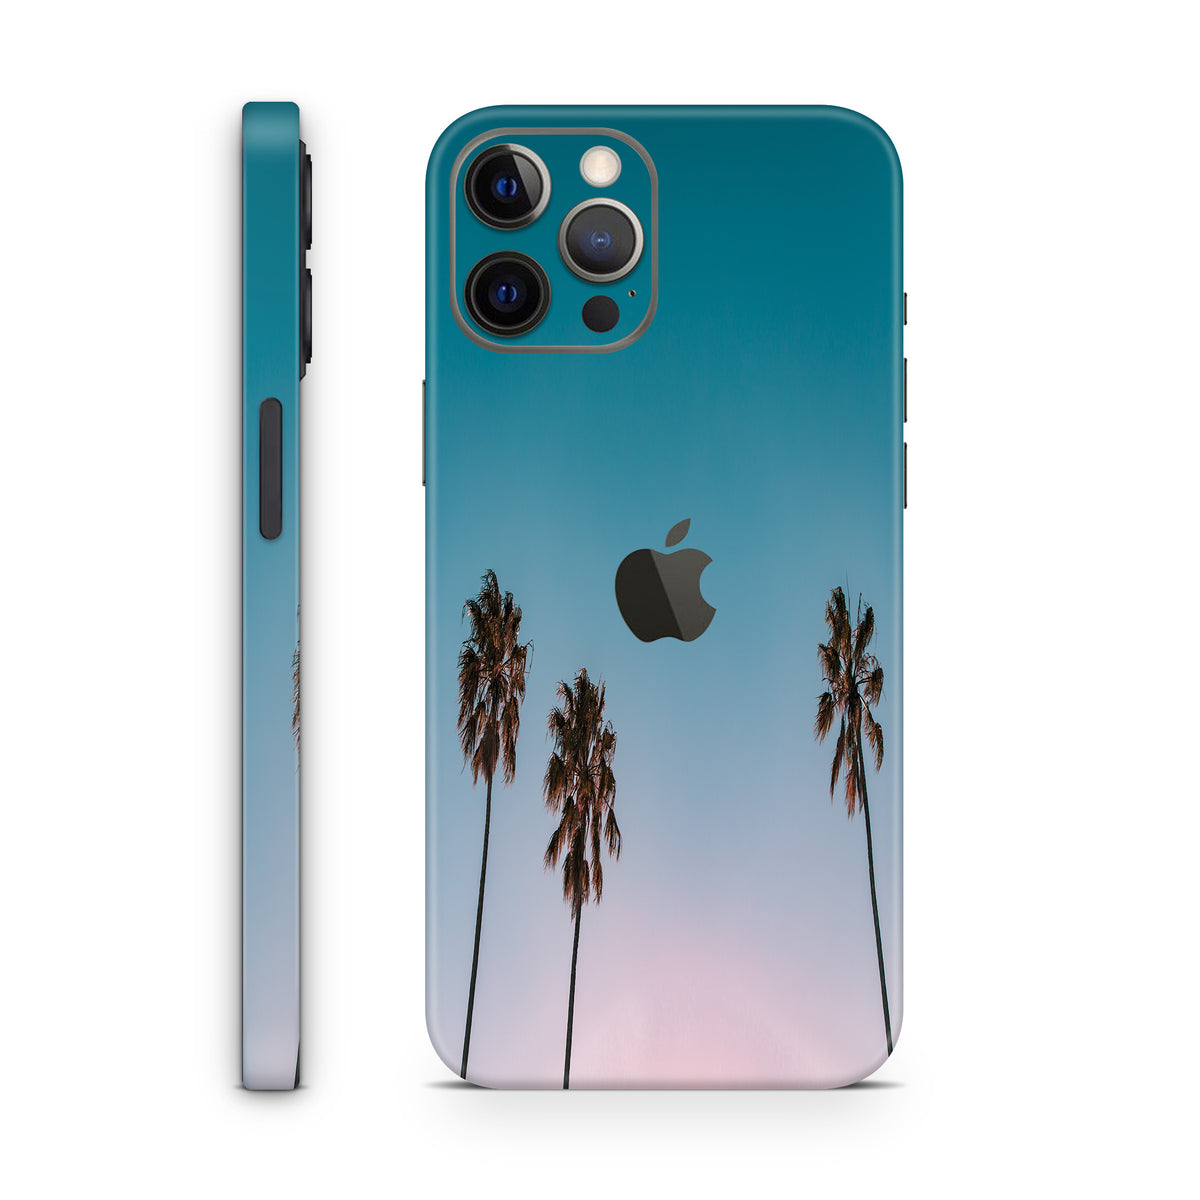 Ventura (iPhone Skin)